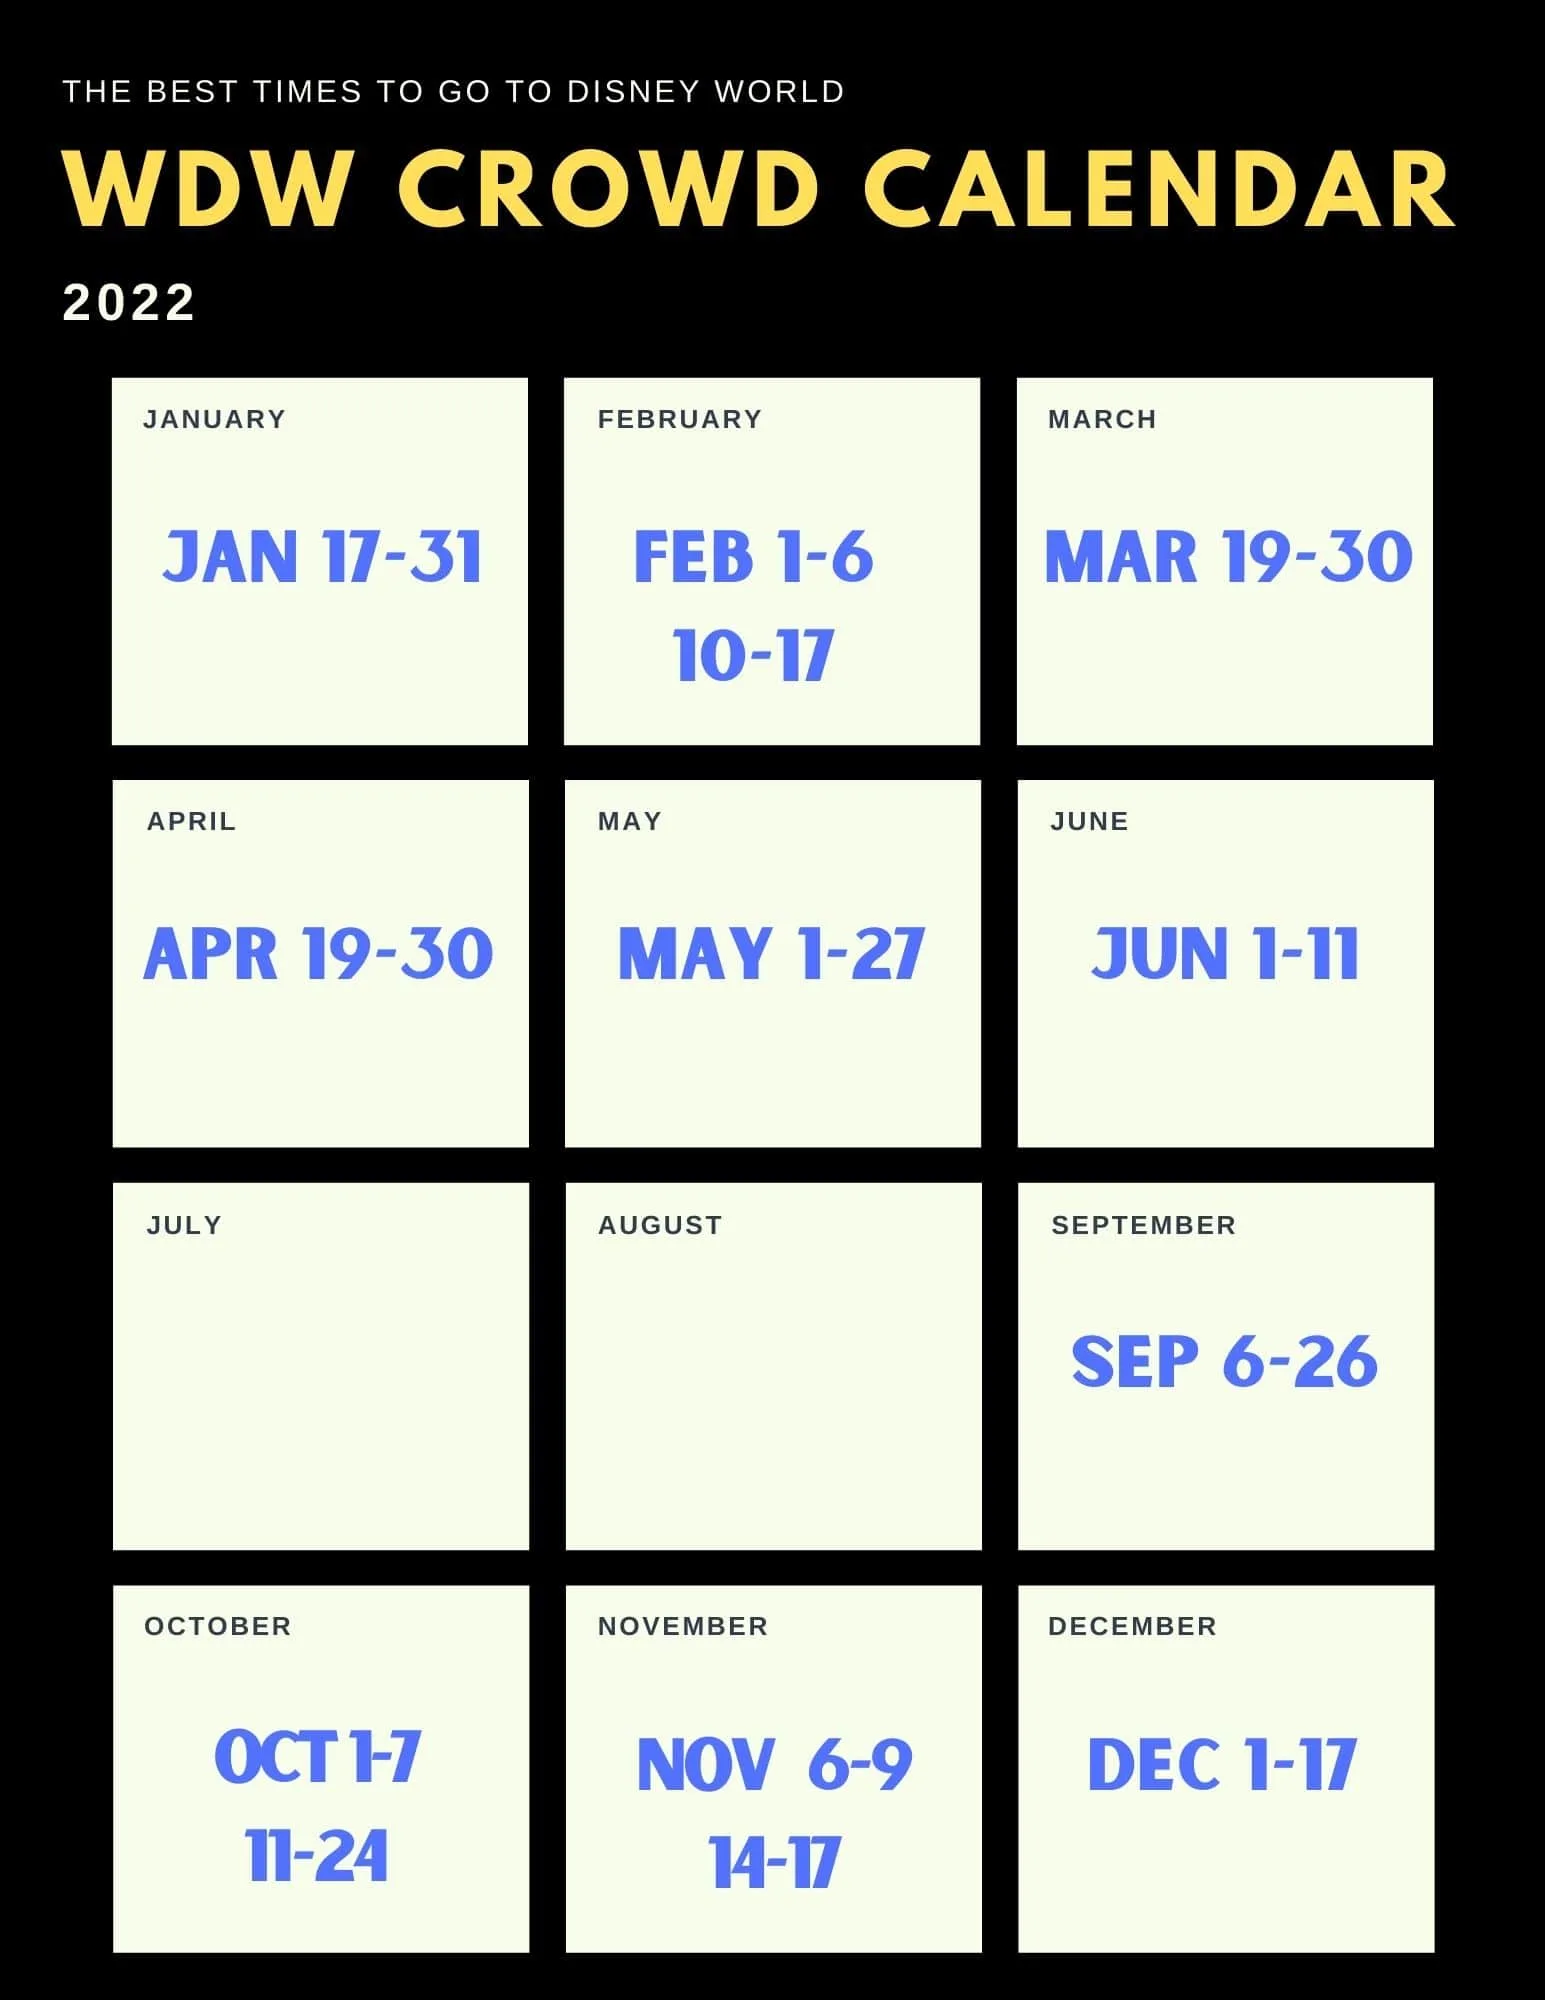 Crowd Calendar Disney World December 2022 Disney World Crowd Calendar 2022 - Disney Insider Tips